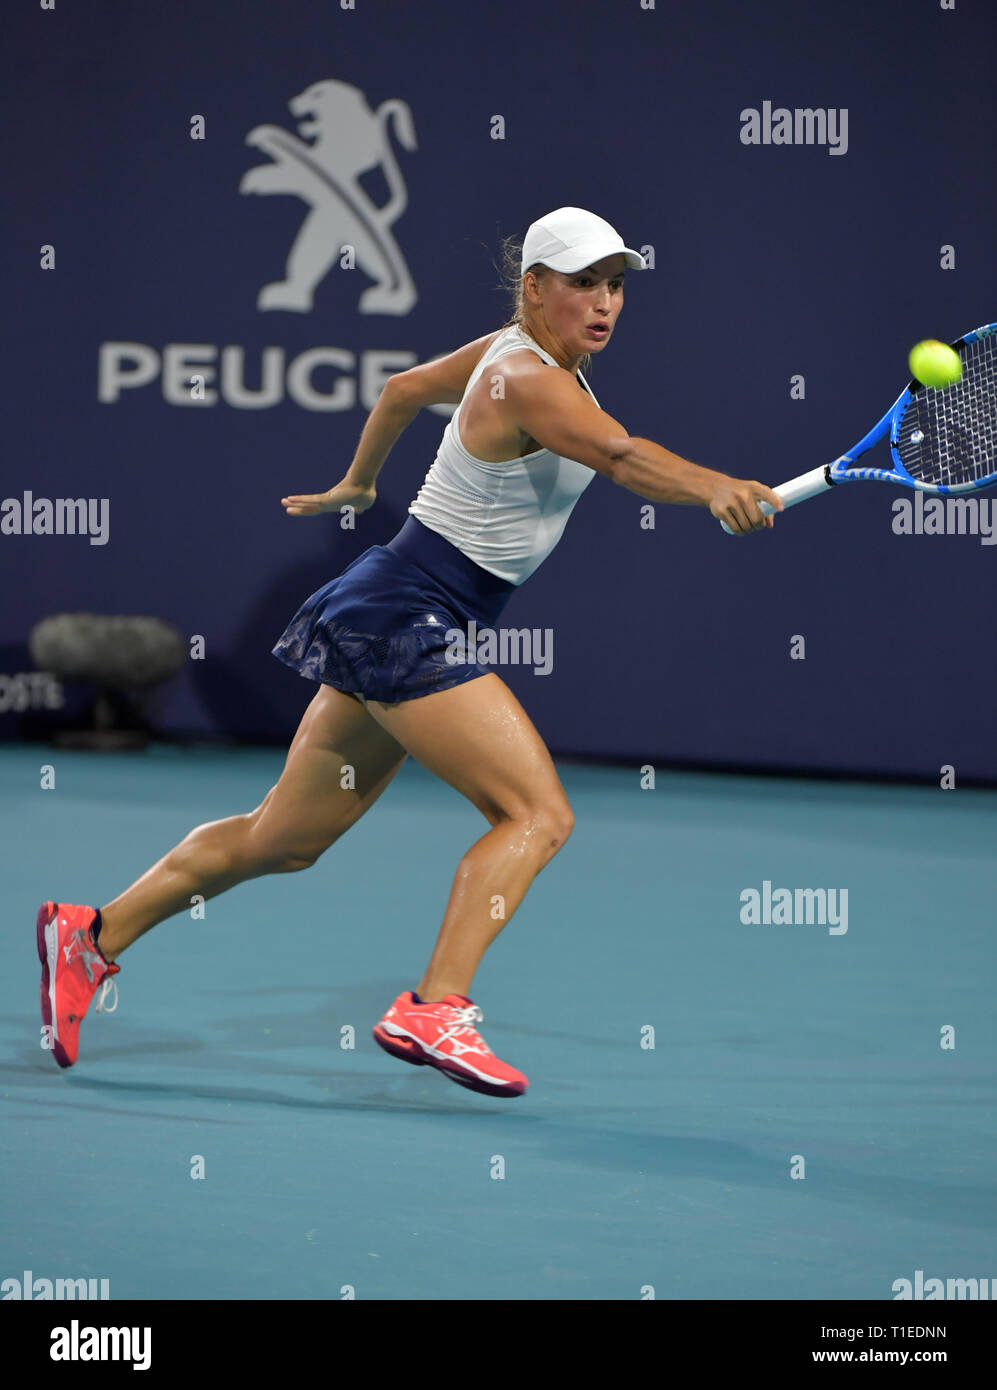 Yulia putintseva hard court tennis hi-res stock photography and images -  Alamy